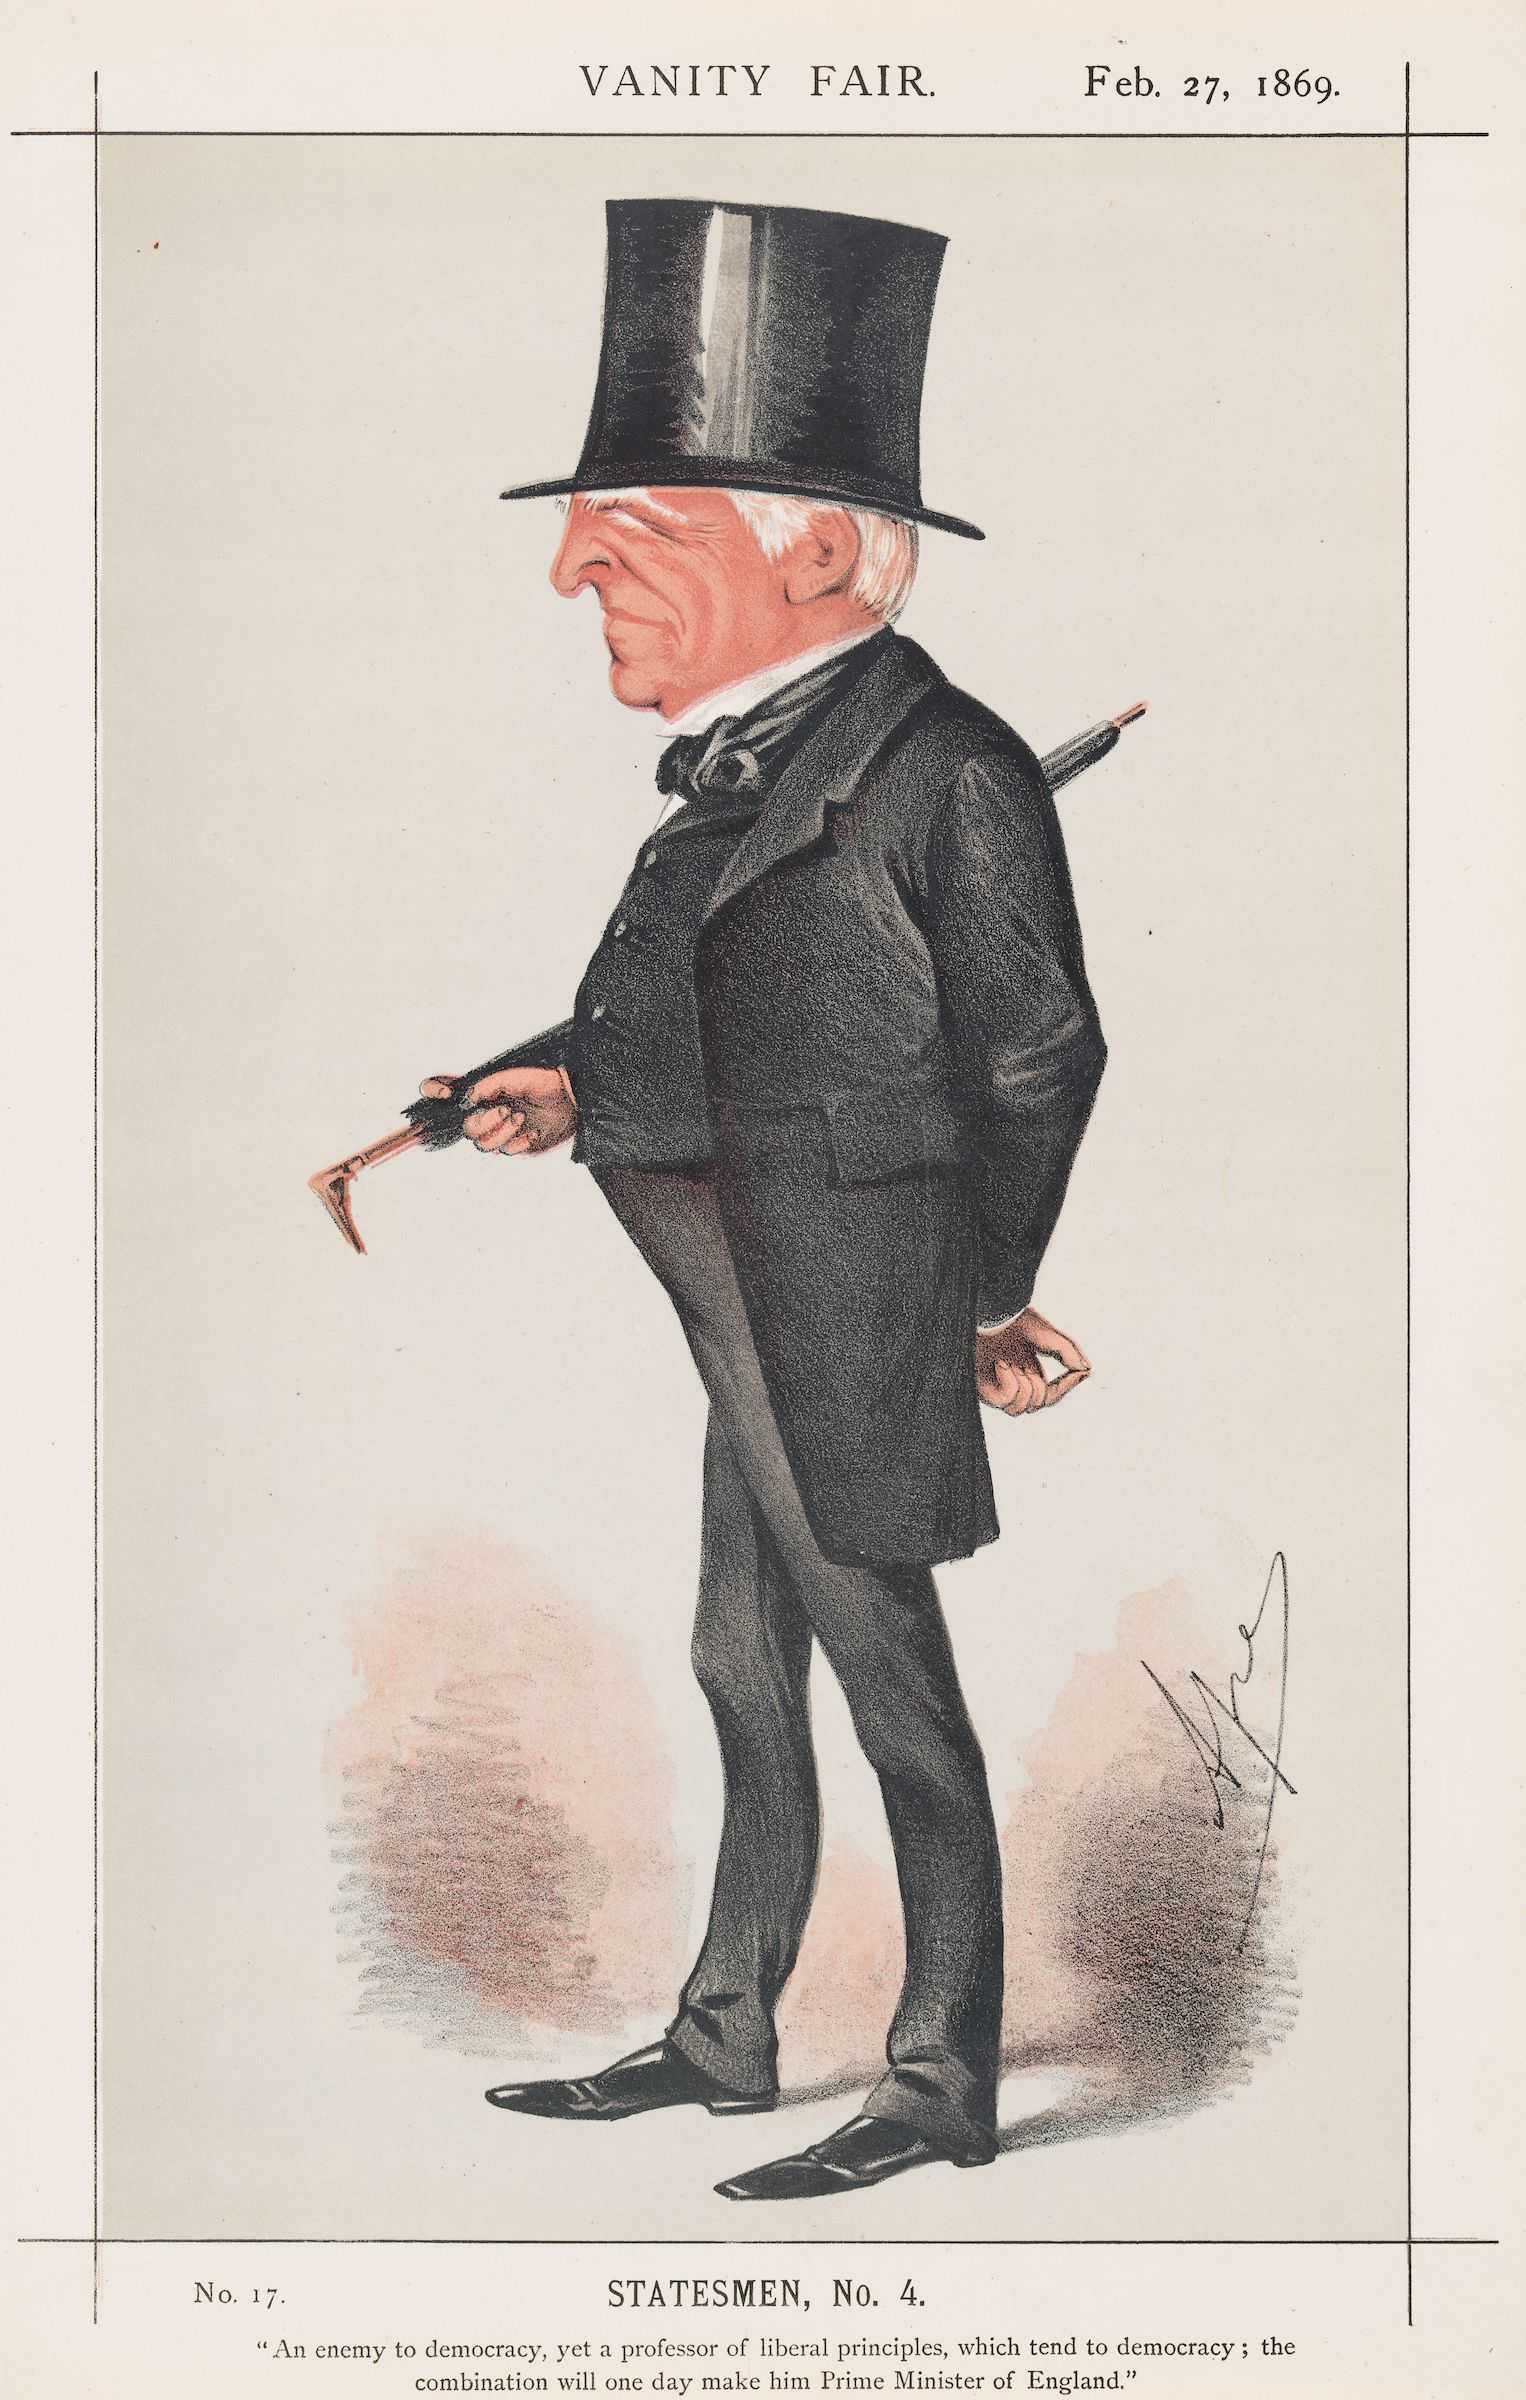 Viscount Robert Lowe (Image plate from Vanity Fair Magazine)